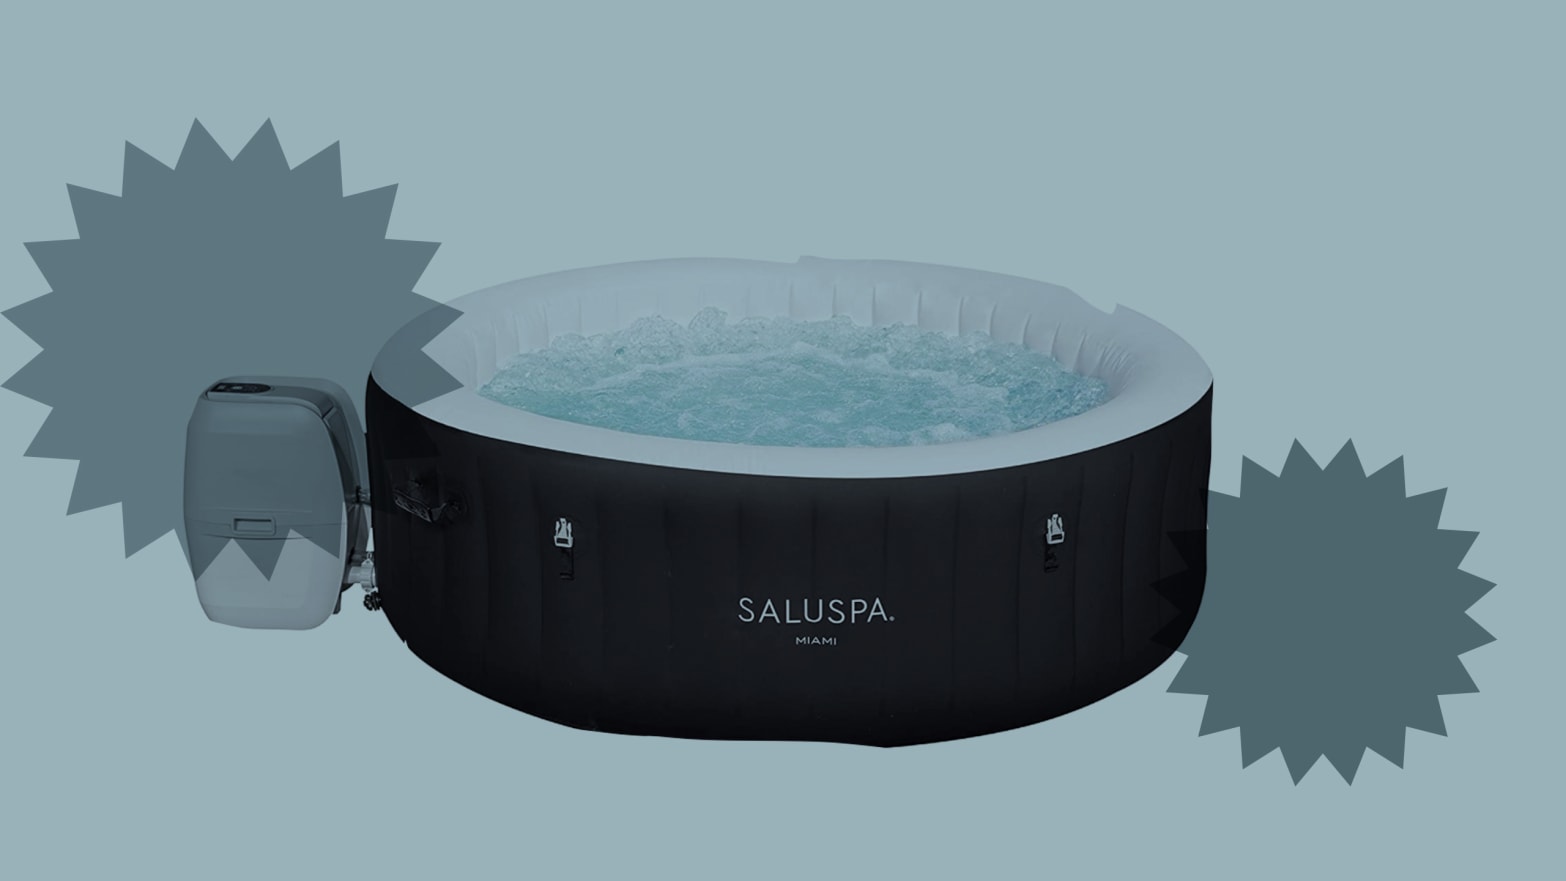 Saluspa inflatable hot tub review 2022